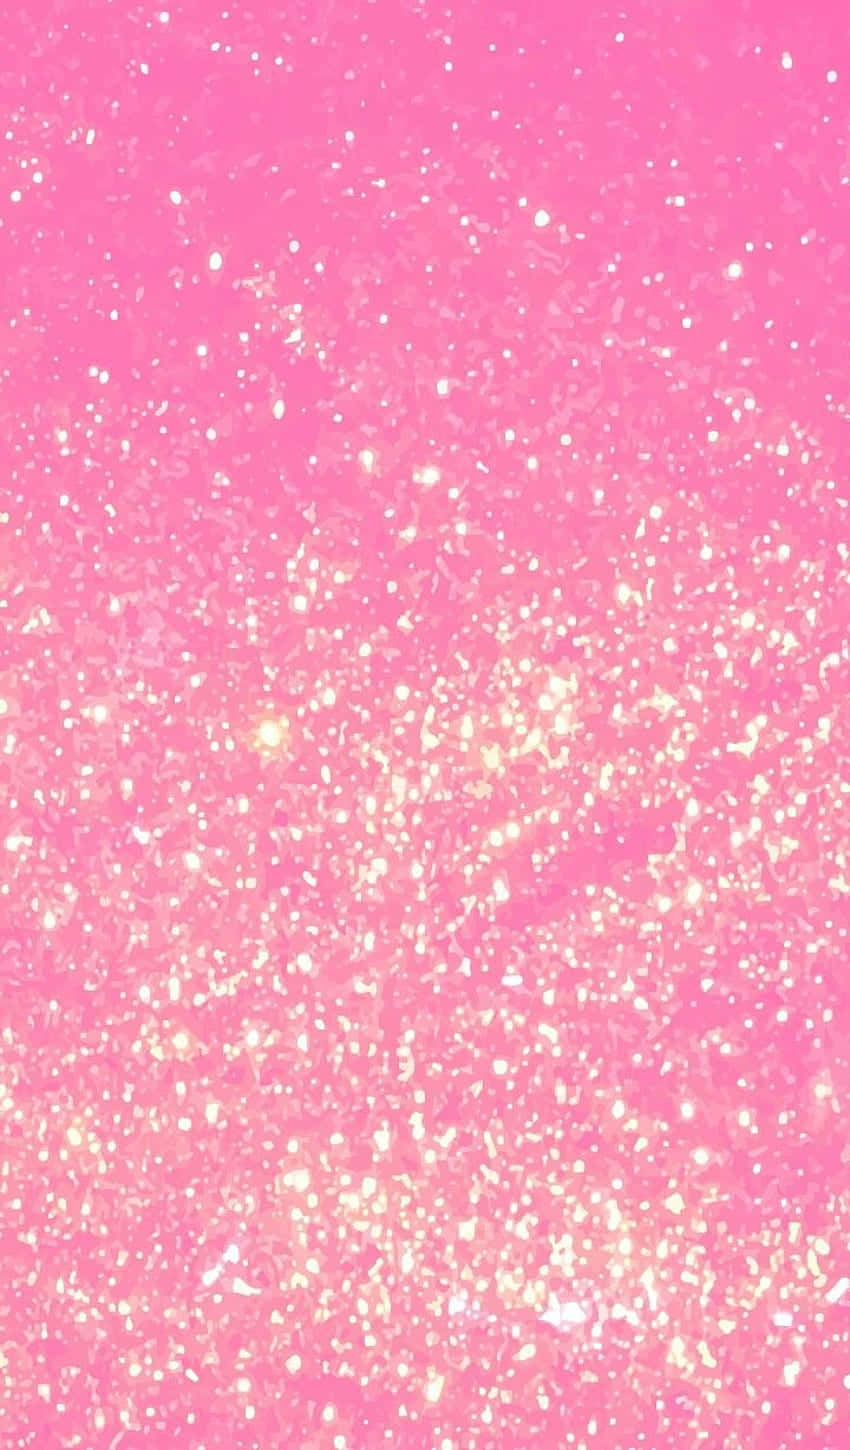 Caption: Sparkling Hot Pink Glitter Background